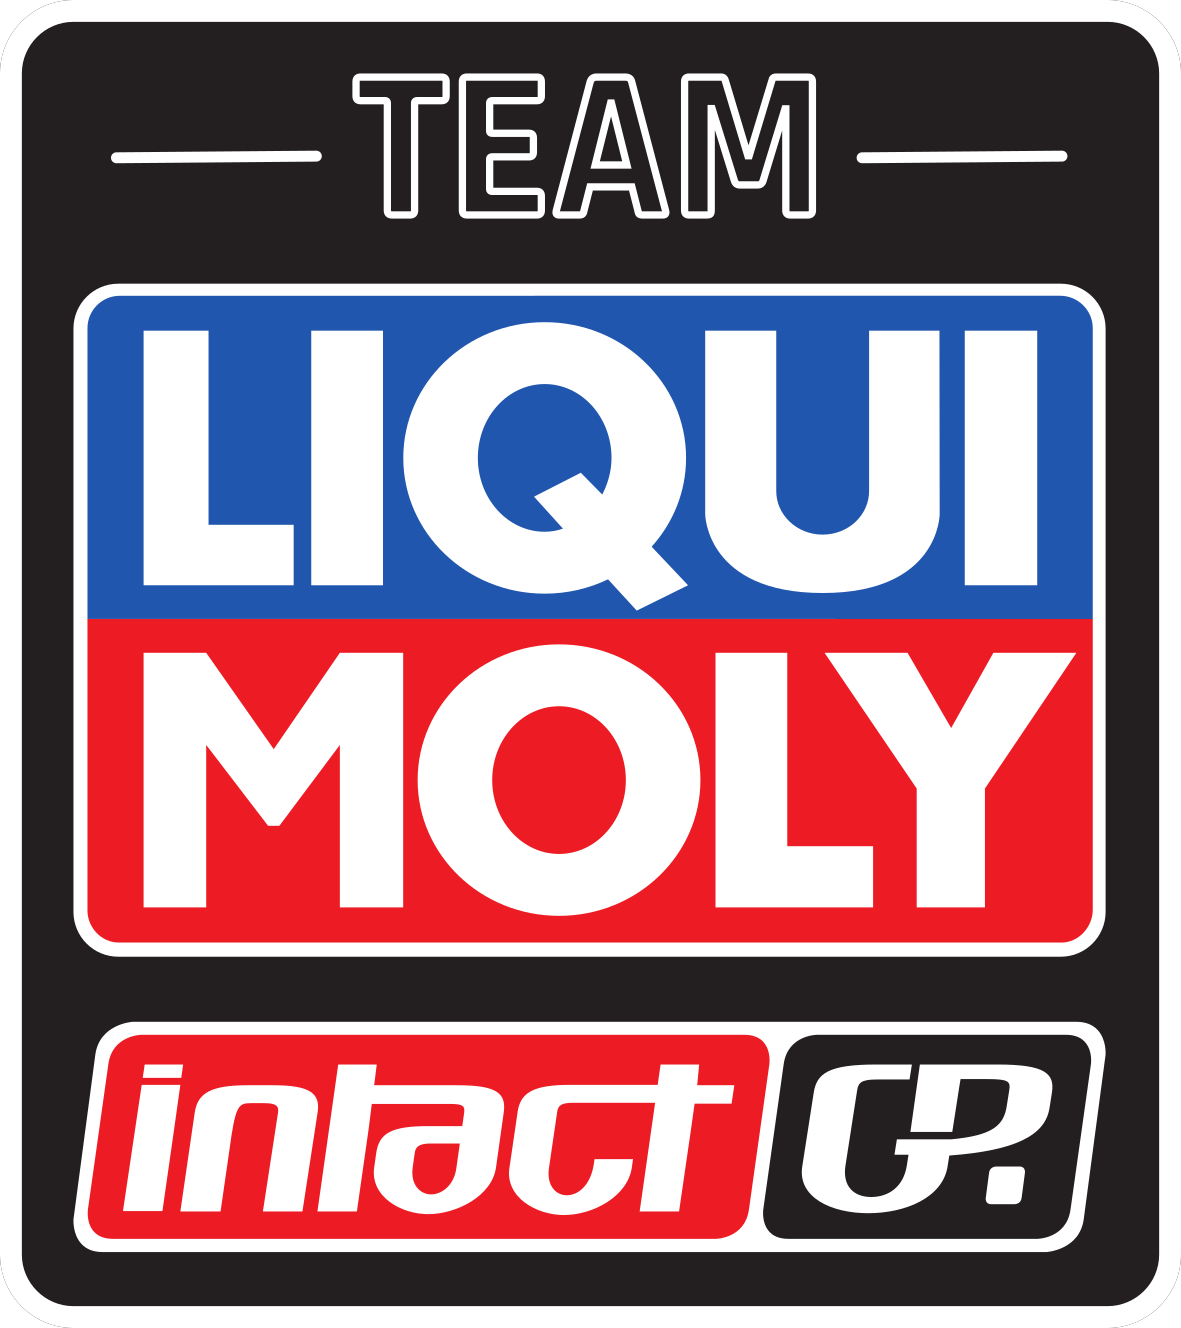 LIQUI MOLY Husqvarna Intact GP Team-Hospitality inkl. Paddock Pass